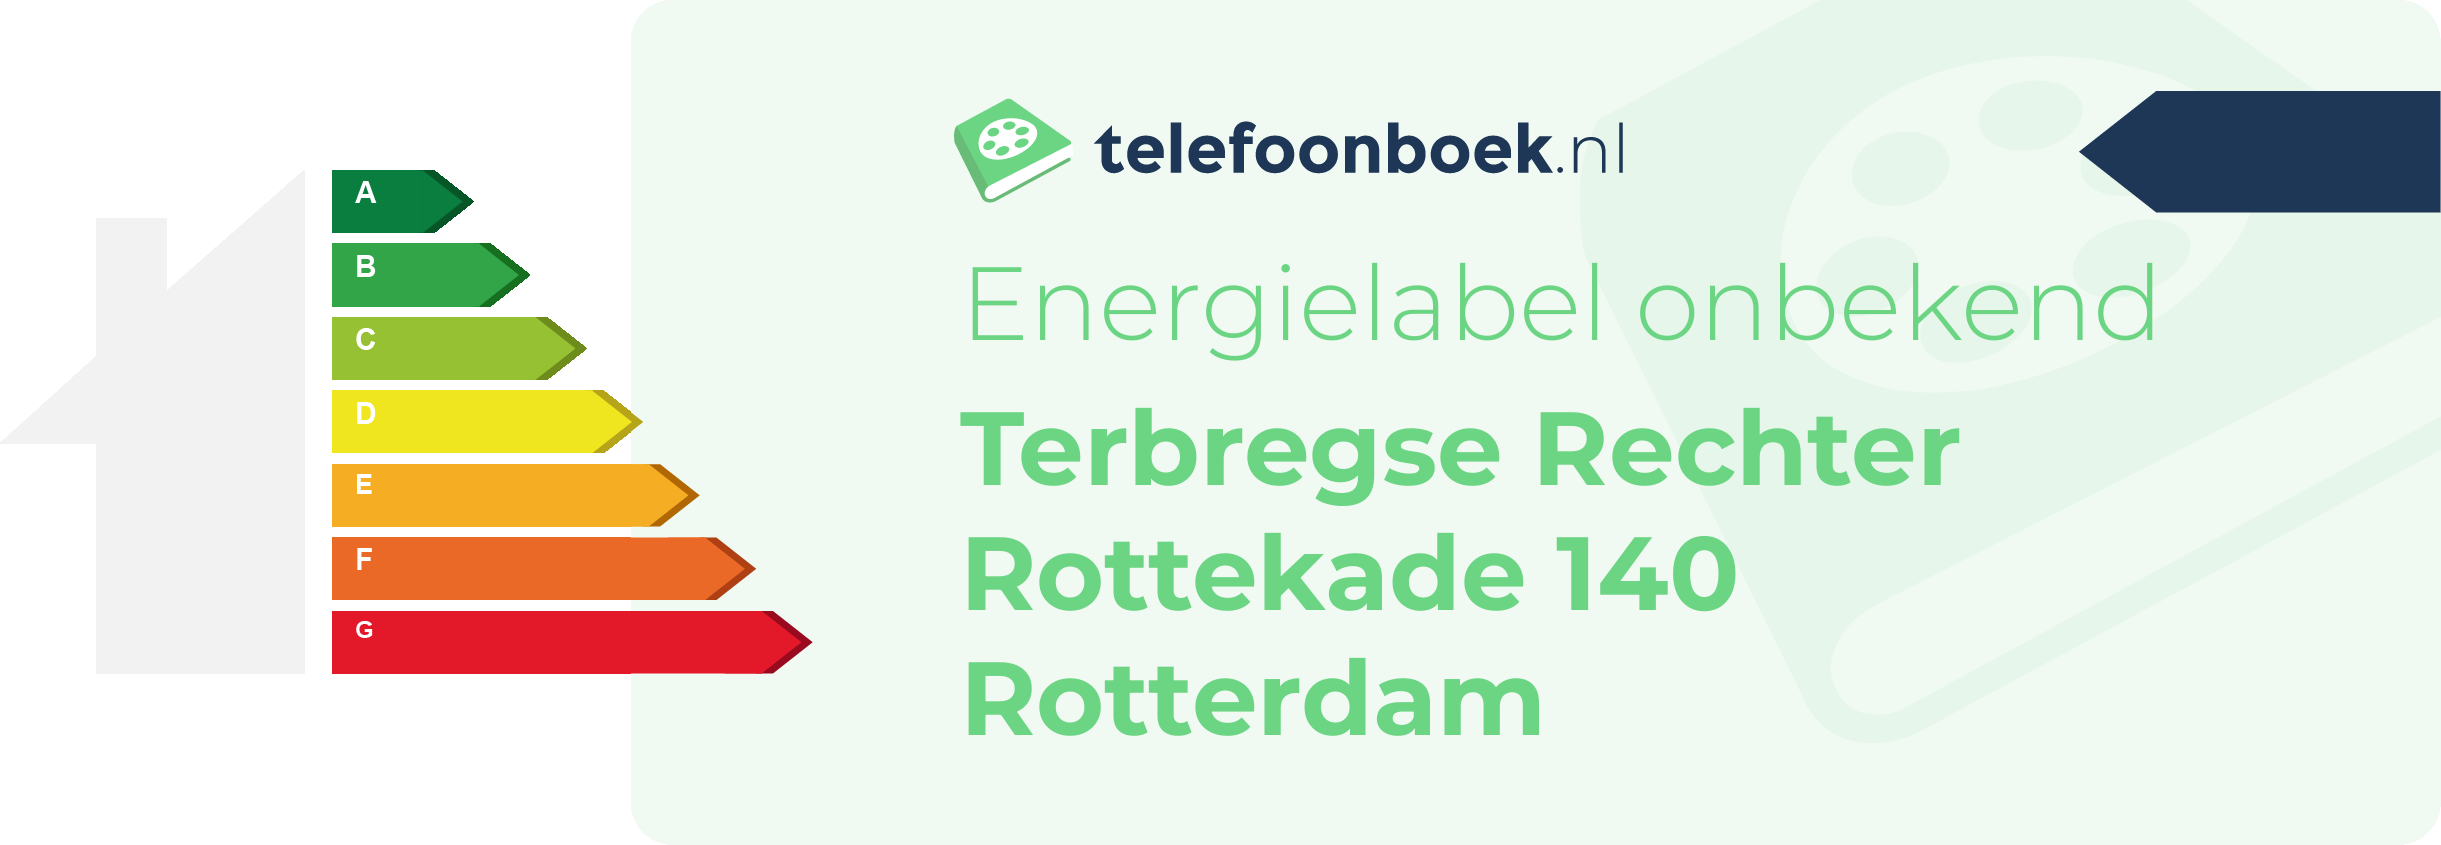 Energielabel Terbregse Rechter Rottekade 140 Rotterdam